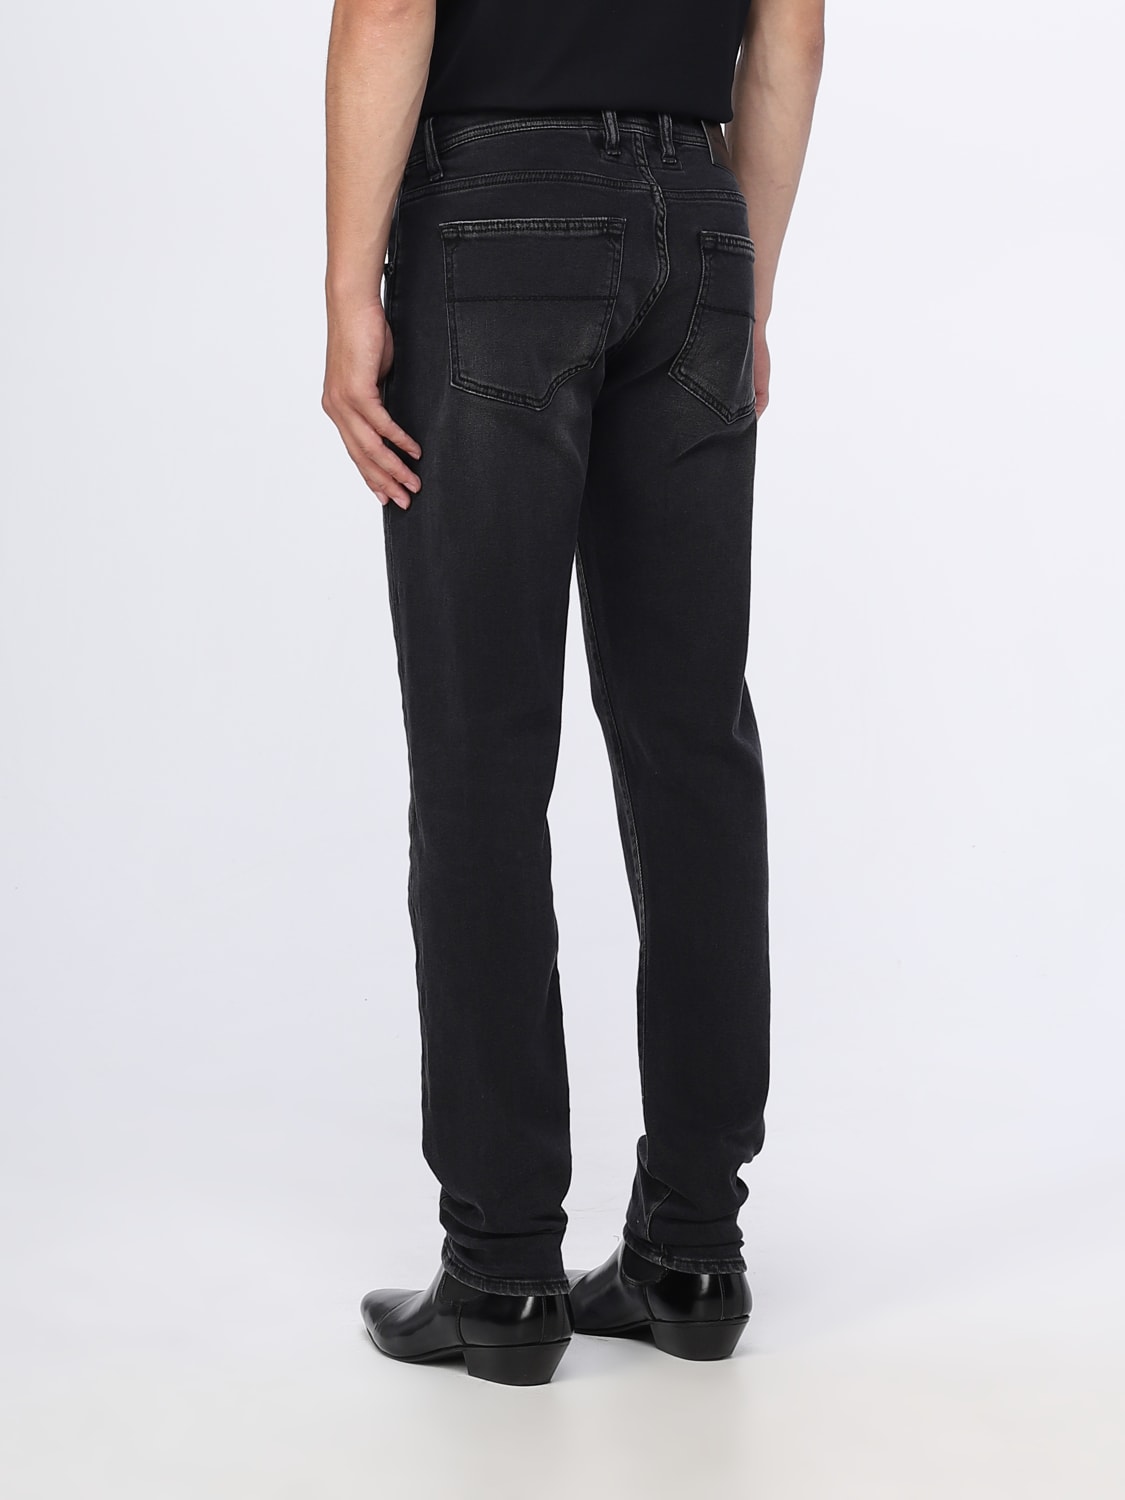 TRAMAROSSA: jeans for man - Black | Tramarossa jeans 1980 D394 ...